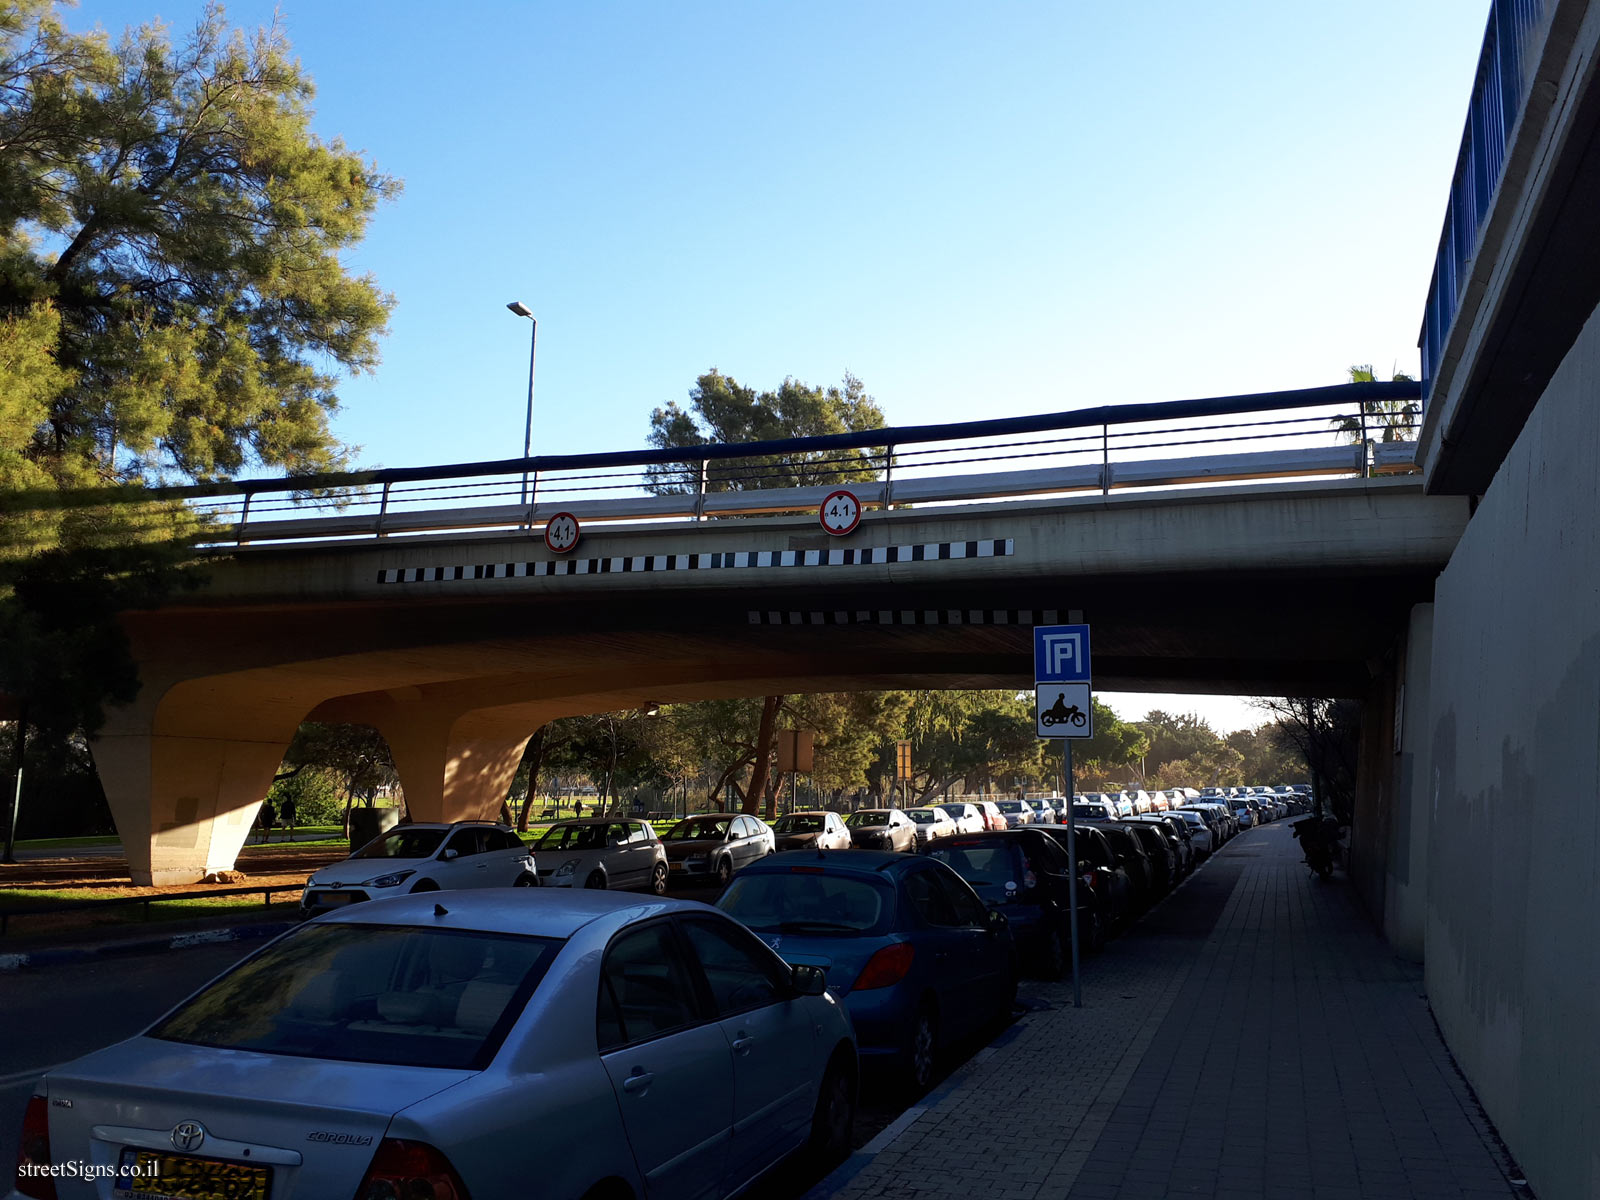 Tel Aviv - Bar-Yehuda Bridge - The base of the bridge